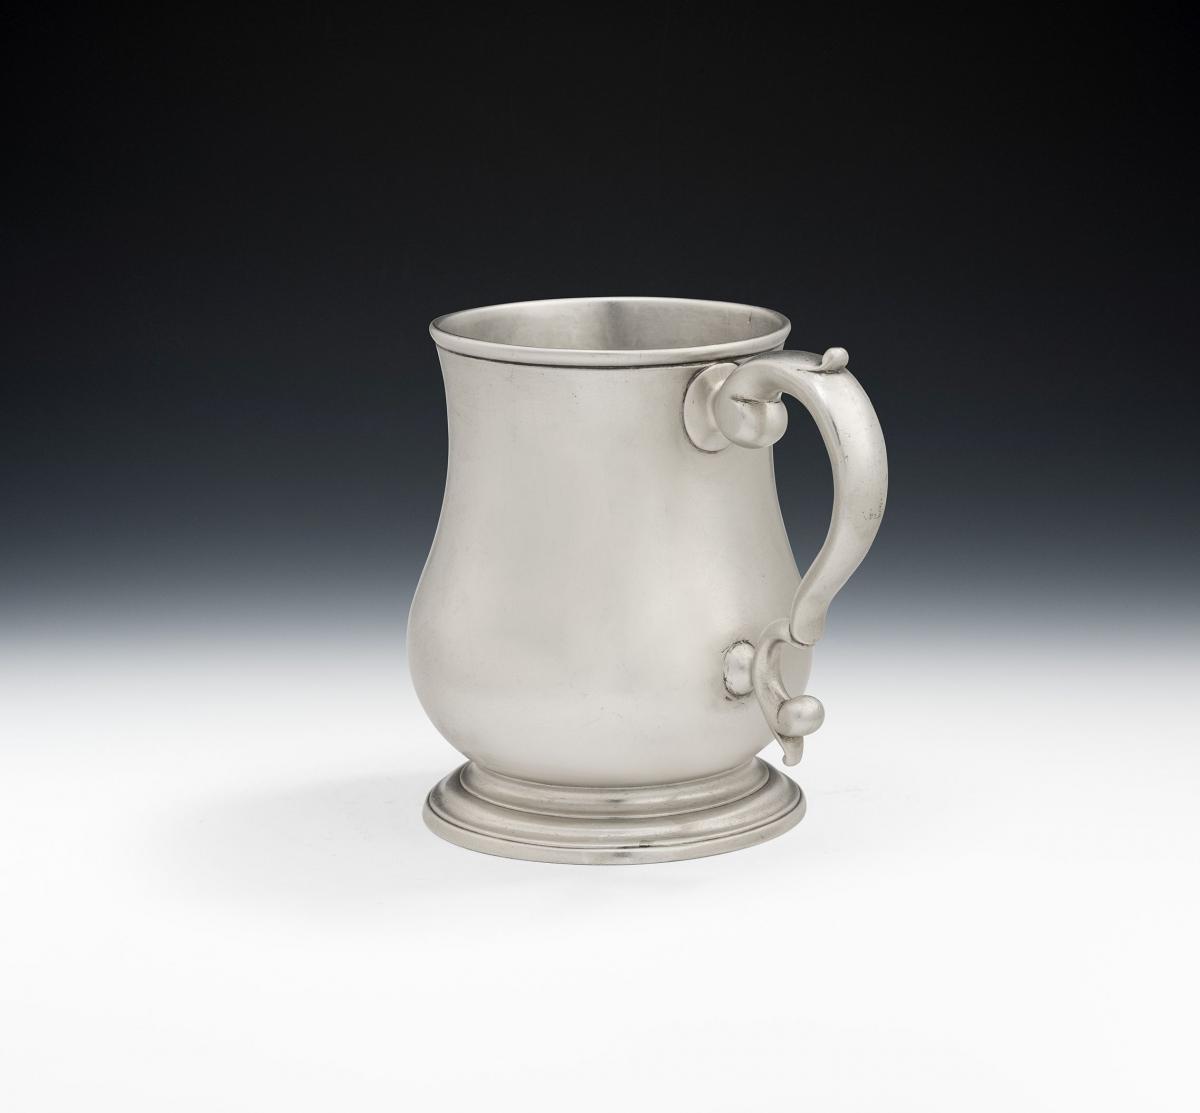 A fine George III Mug made in London in 1734 by Thomas Farren